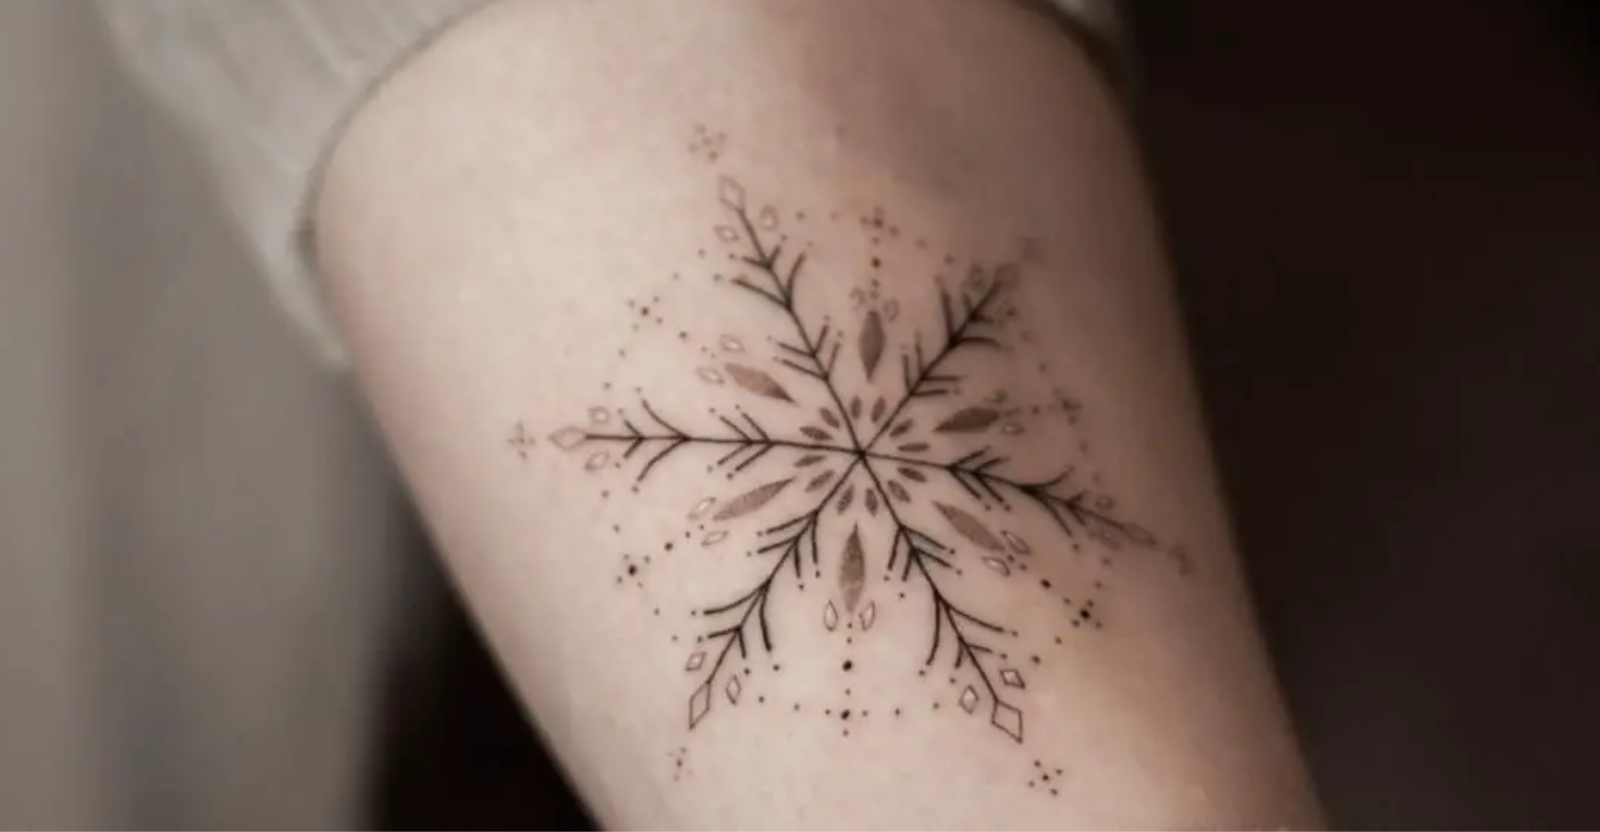 snowflake tattoos for men